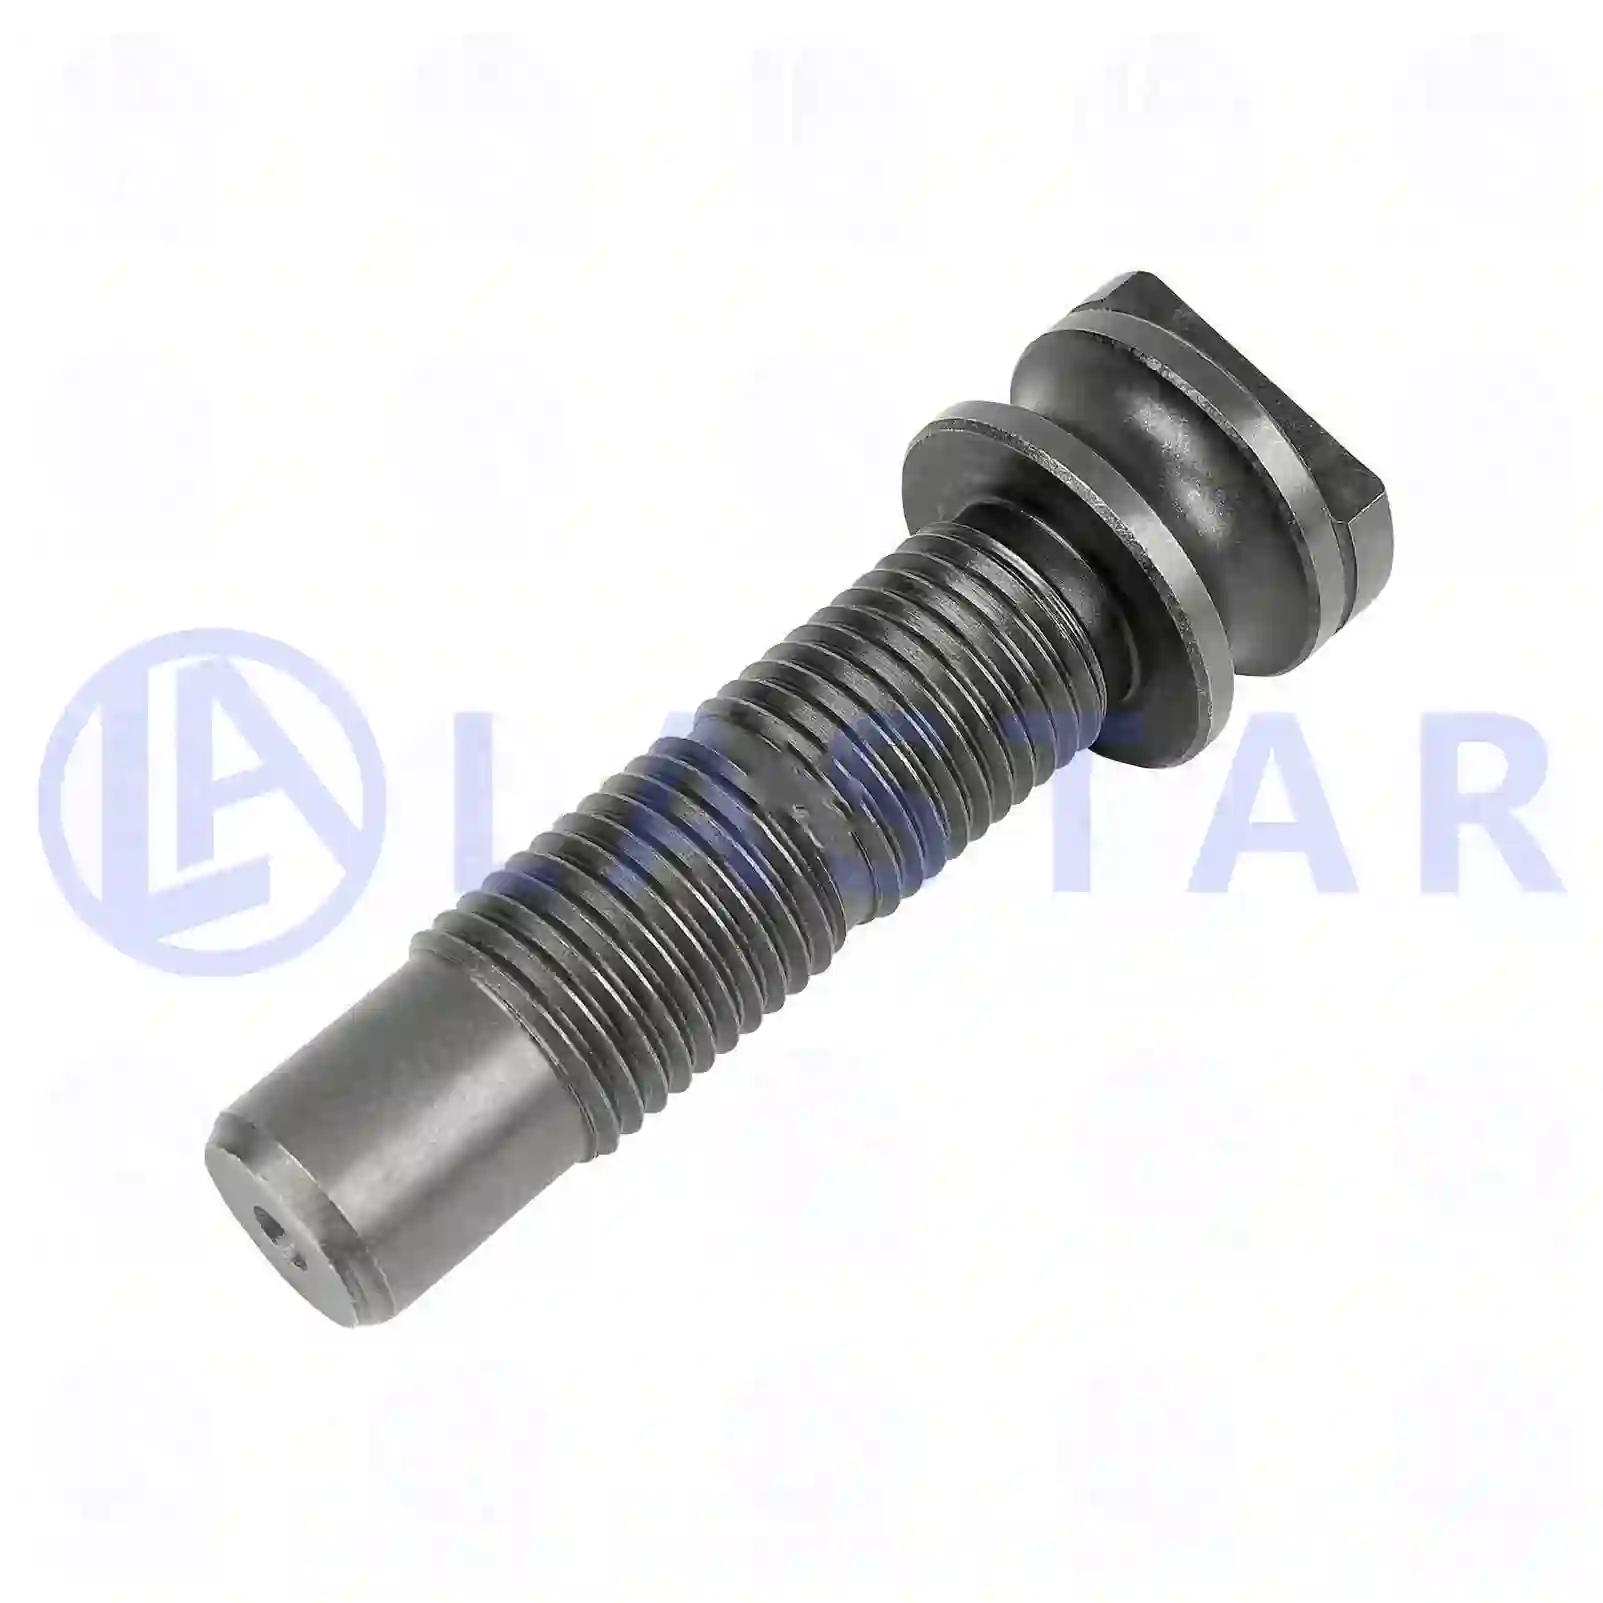  Spring bolt || Lastar Spare Part | Truck Spare Parts, Auotomotive Spare Parts